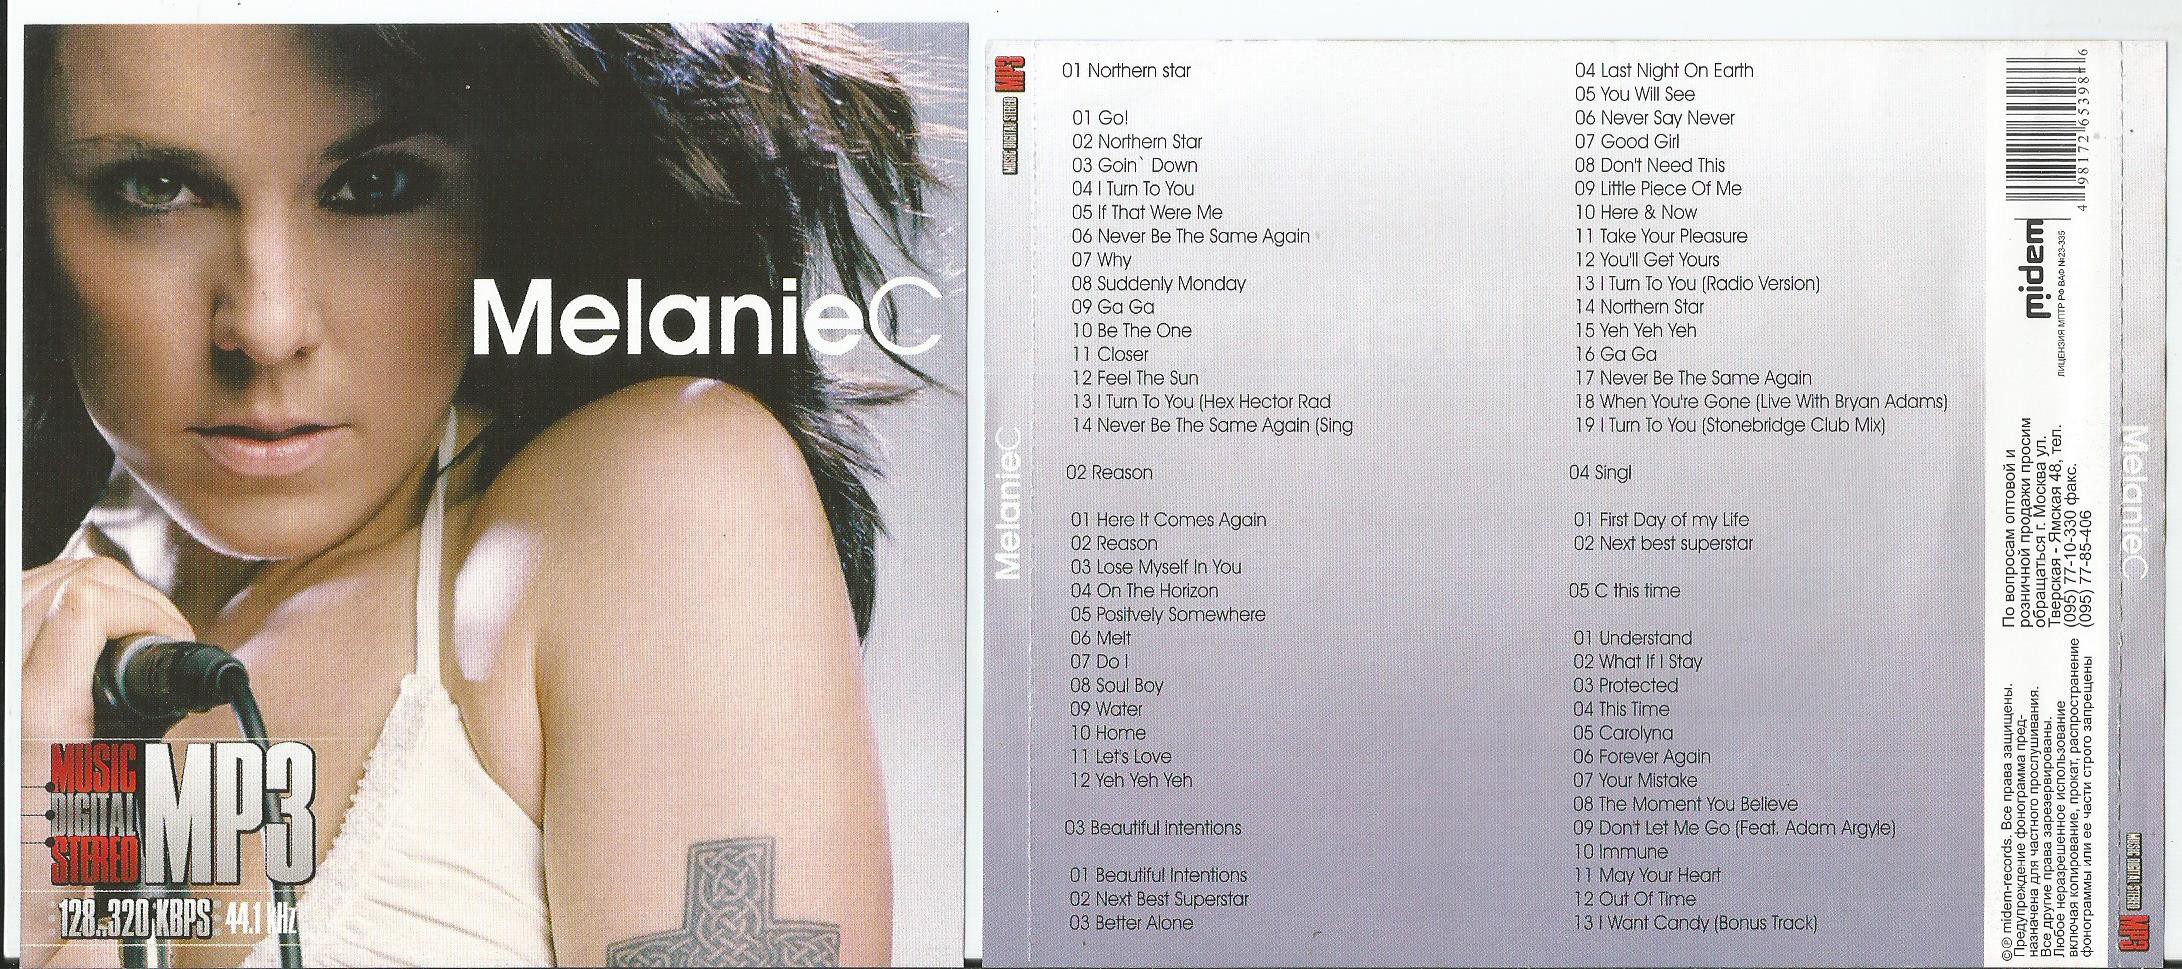 I m closer to you. Melanie c Northern Star обложка. Melanie c 2003 с музыкантами. Брайан Адамс и Мелани си. Мелани певица альбом.